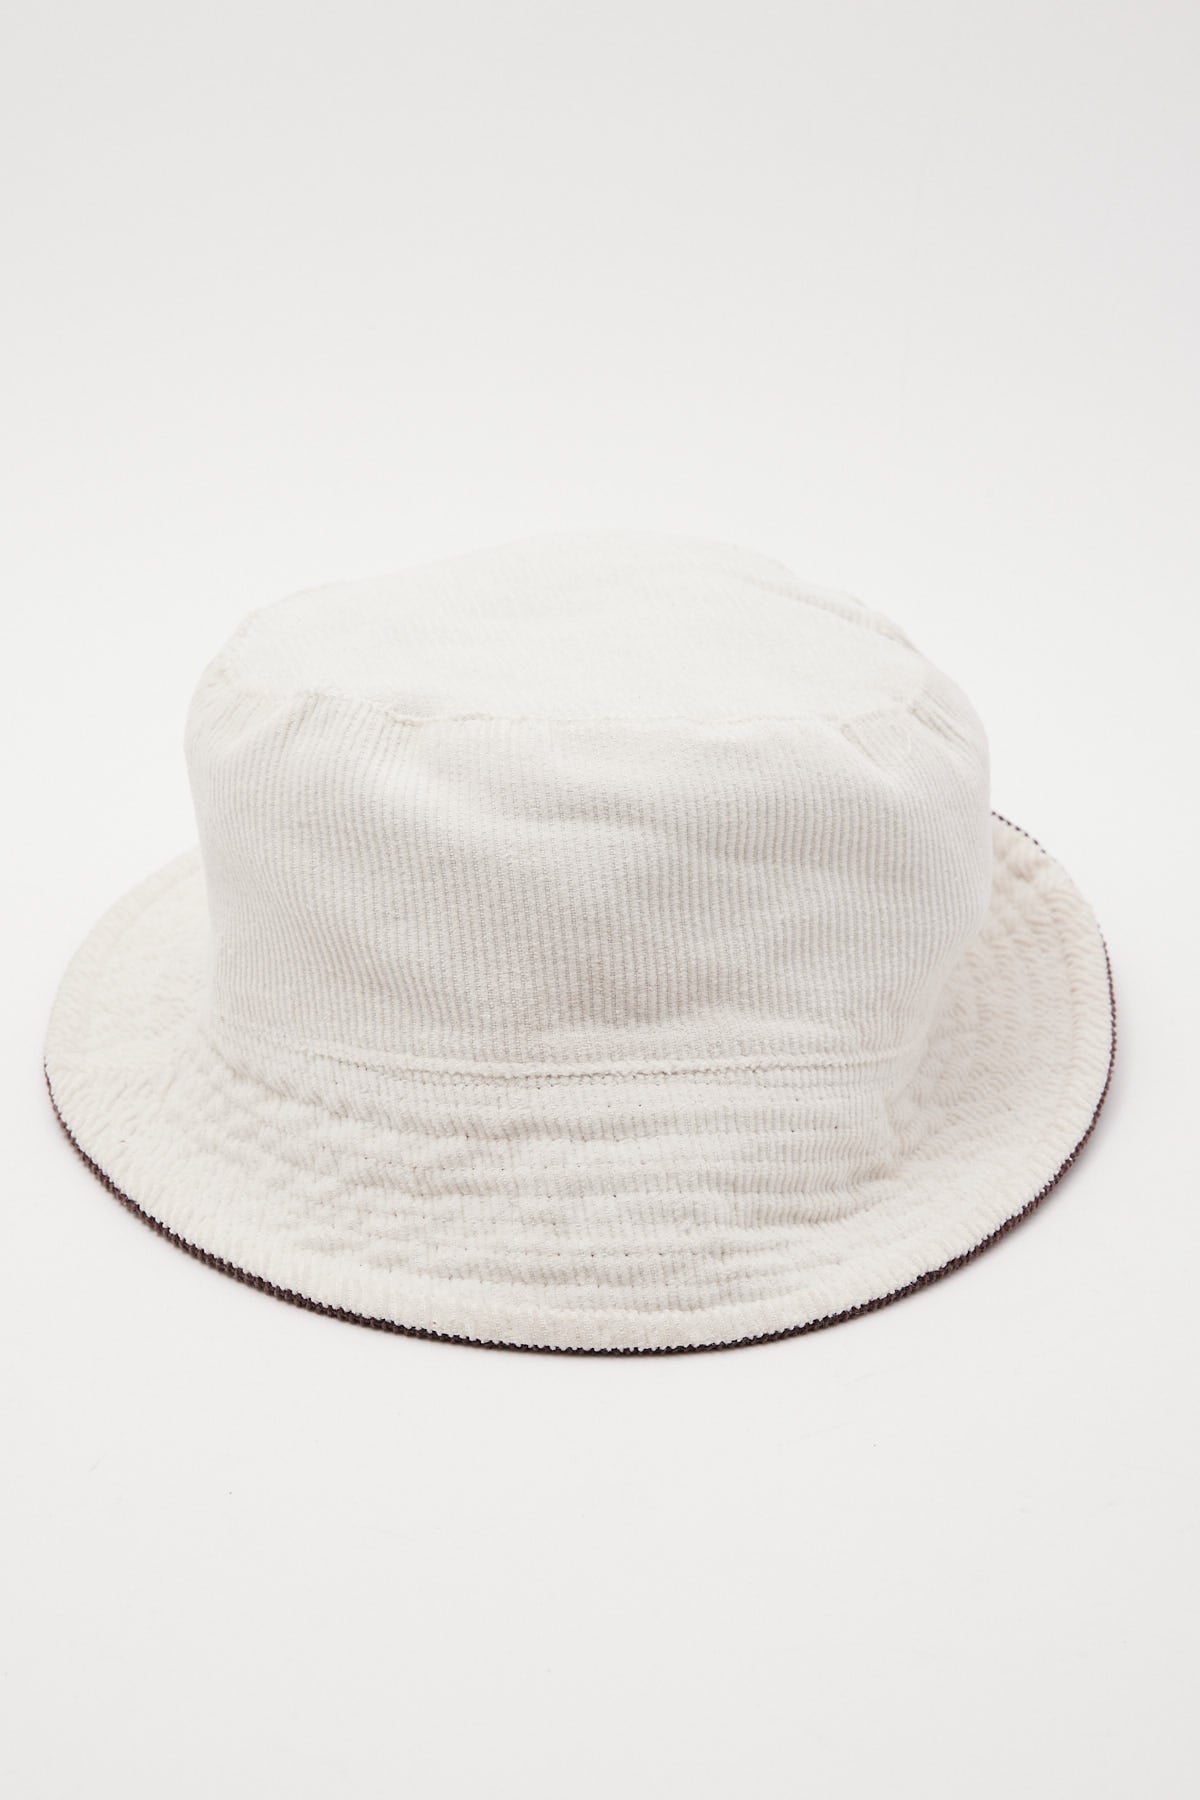 Common Need Chelsea Reversible Bucket Hat